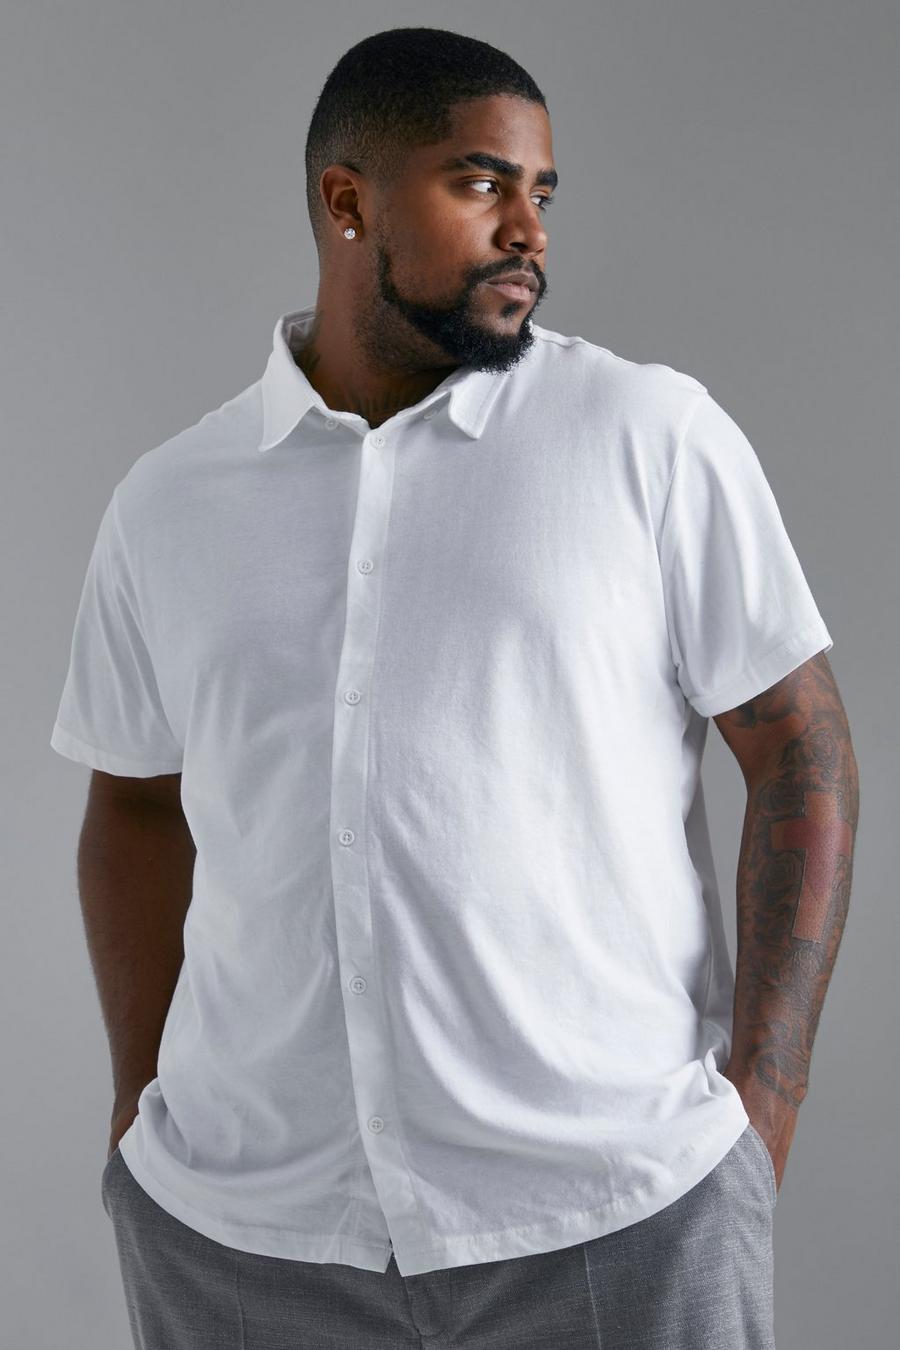 TTOOHHH Mens Plus Size Cotton Button Long Sleeve Lapel Shirt Mens Comfortable Casual Tops Blouse 